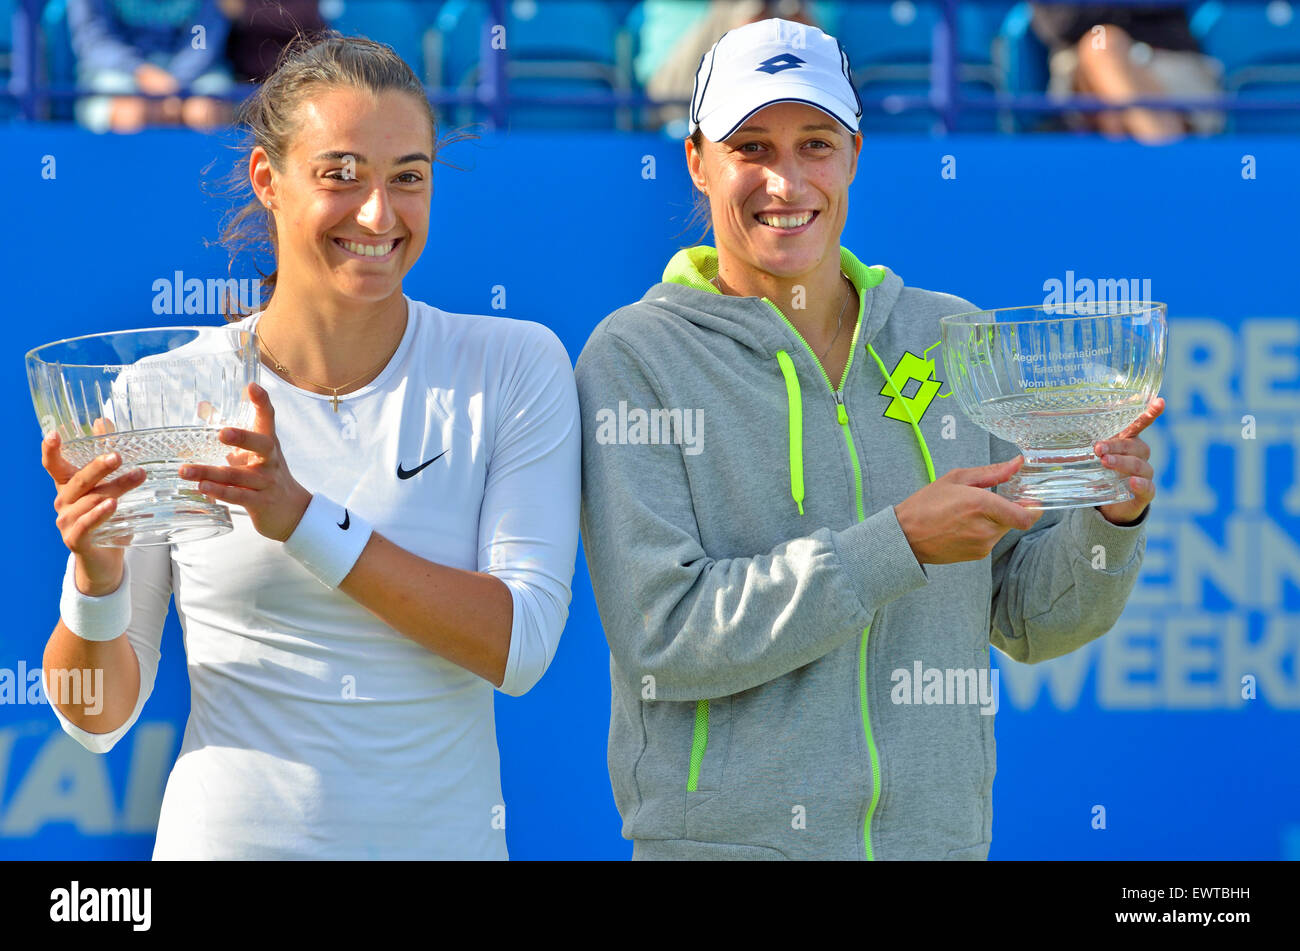 Caroline Garcia (l) and Katarina Srebotnik (r), winners of the Aegon International Doubles trophy at Eastbourne, 2015 Stock Photo